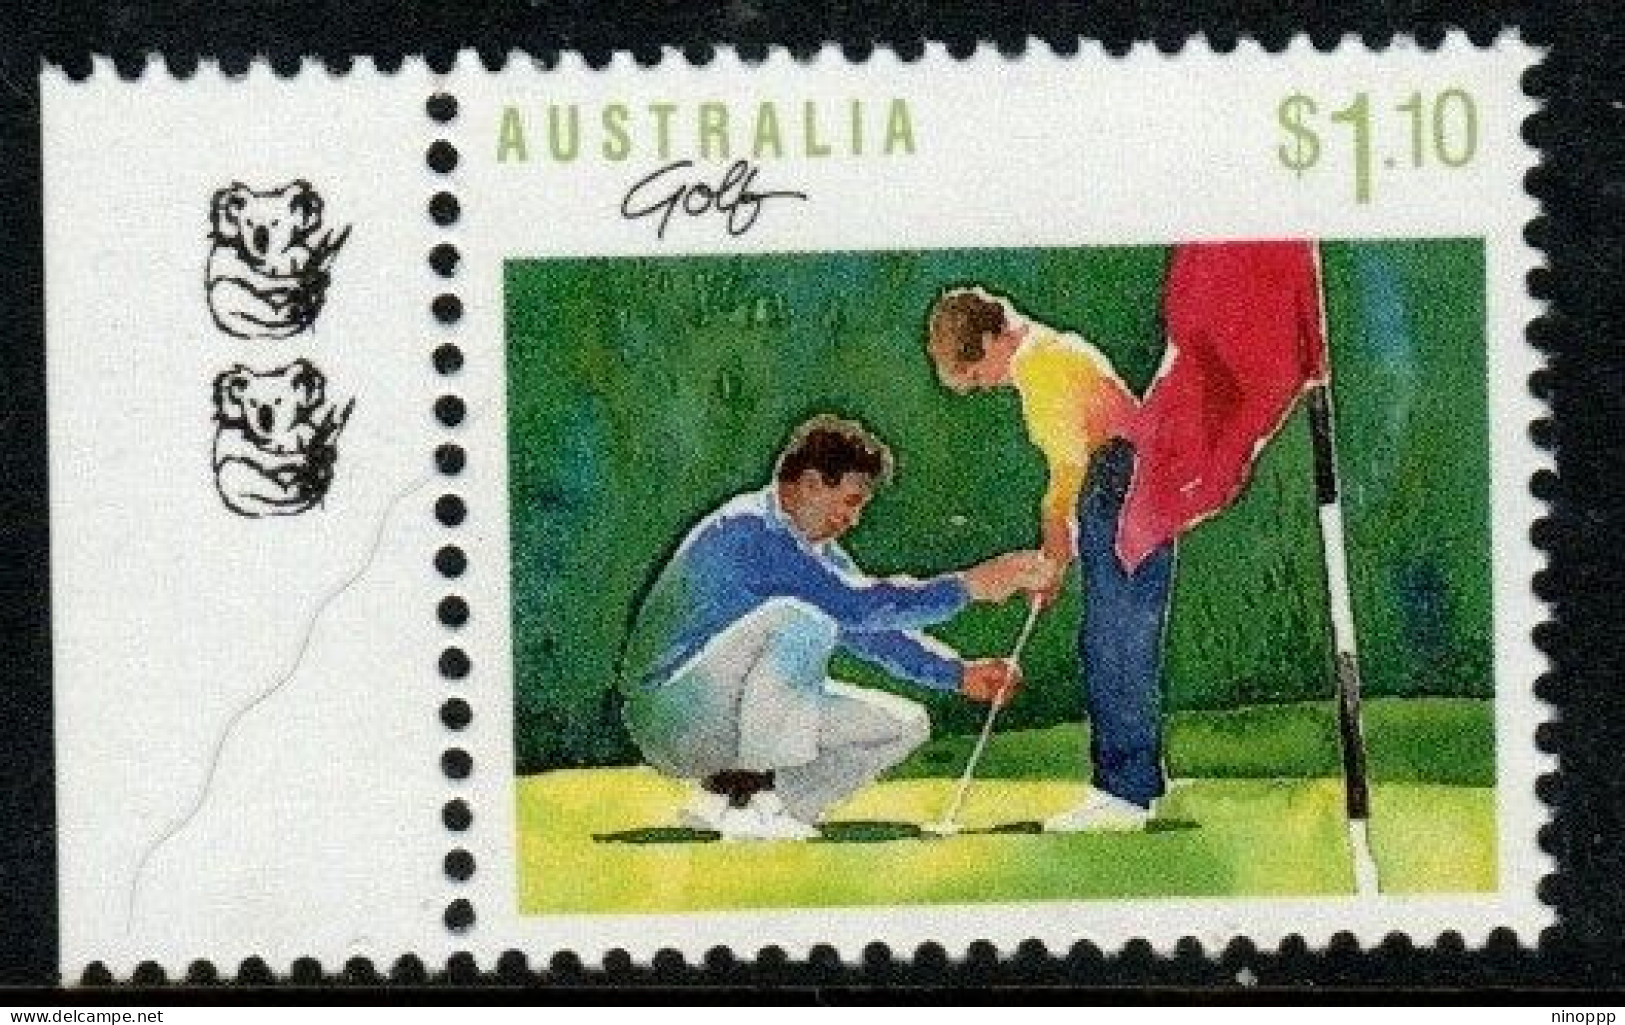 Australia Cat 1188a 1989 Sports $ 1.10 Golf, 2 Koalas Reprint,mint Never Hinged - Essais & Réimpressions